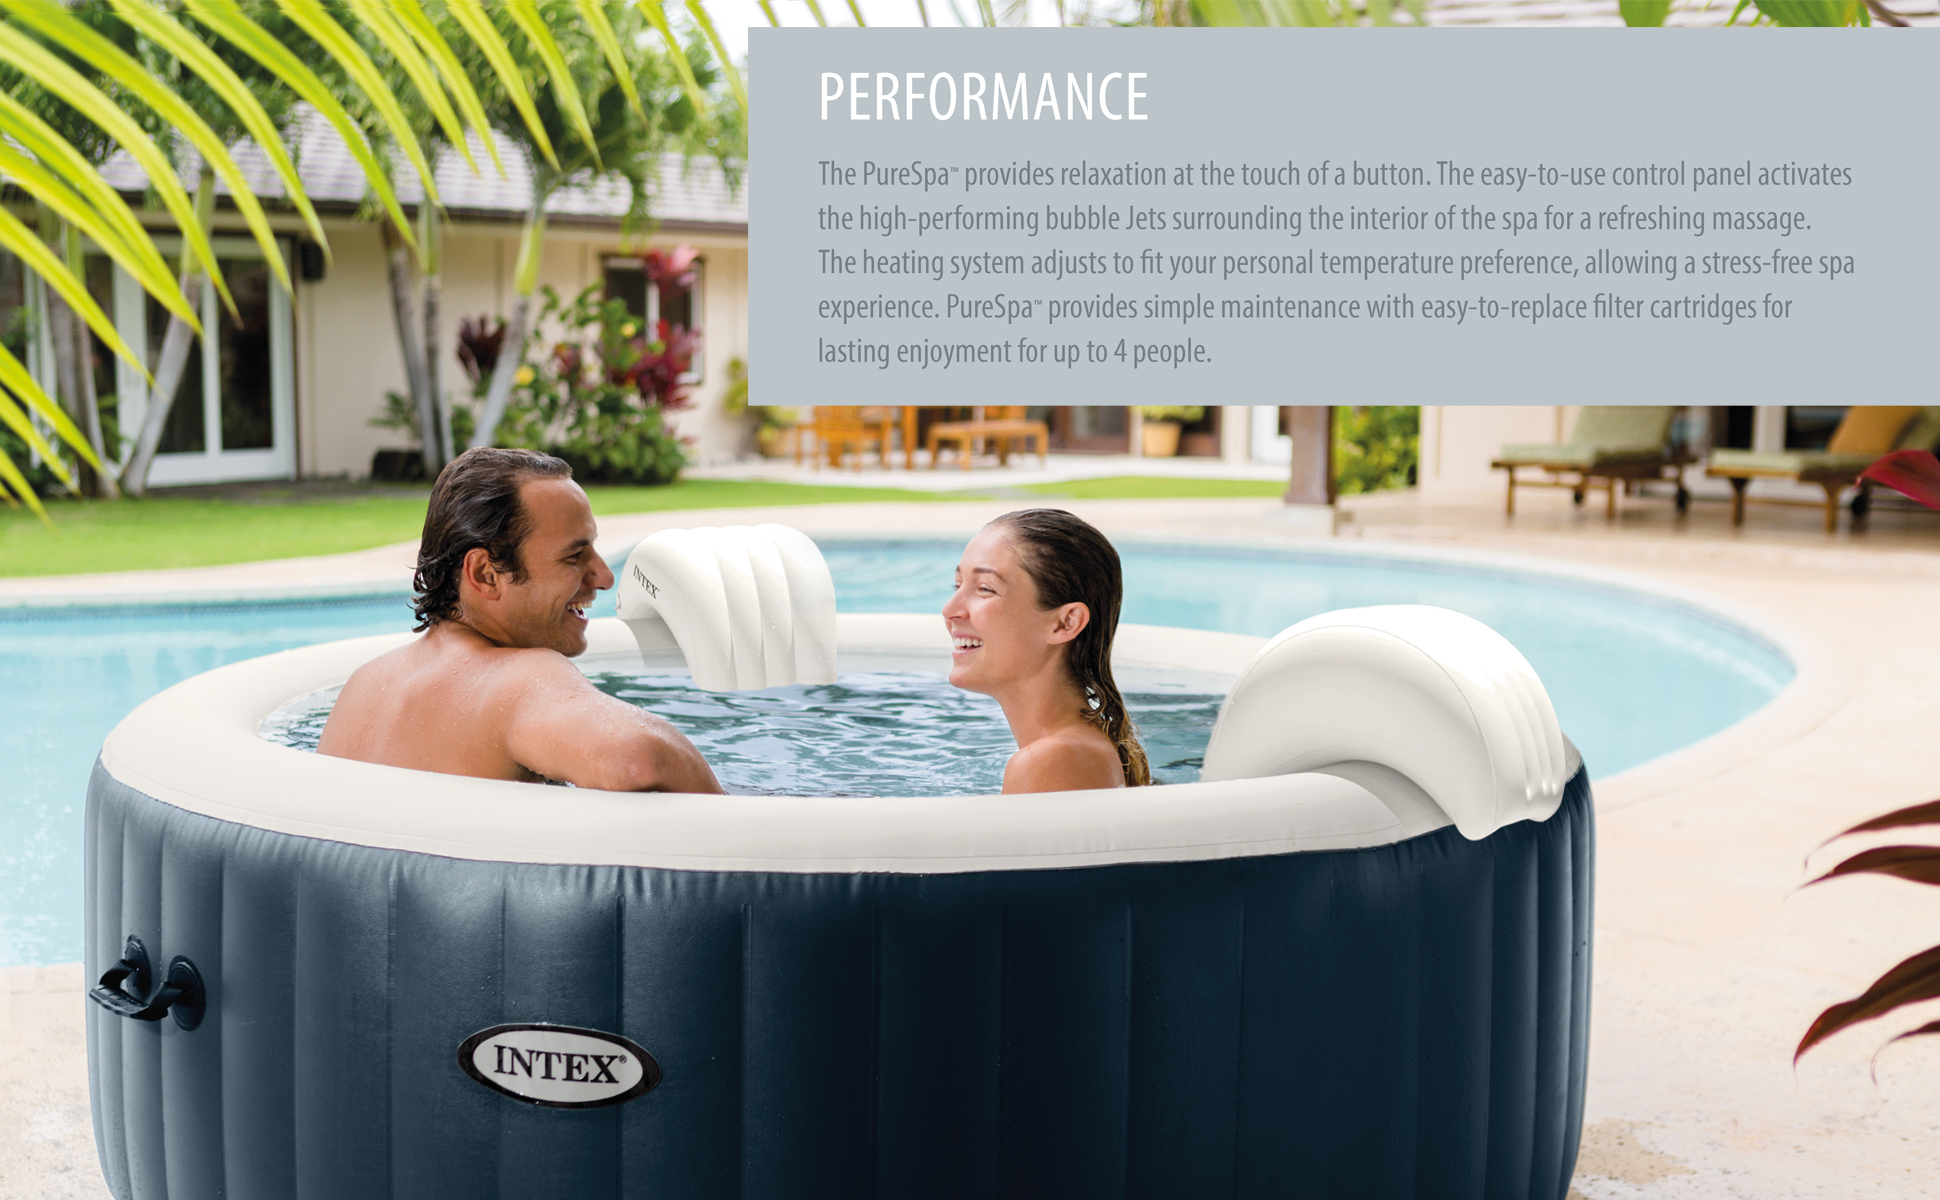 Intex Purespa Plus 6 Person Portable Inflatable Hot Tub Bubble Jet Spa Navy Ebay